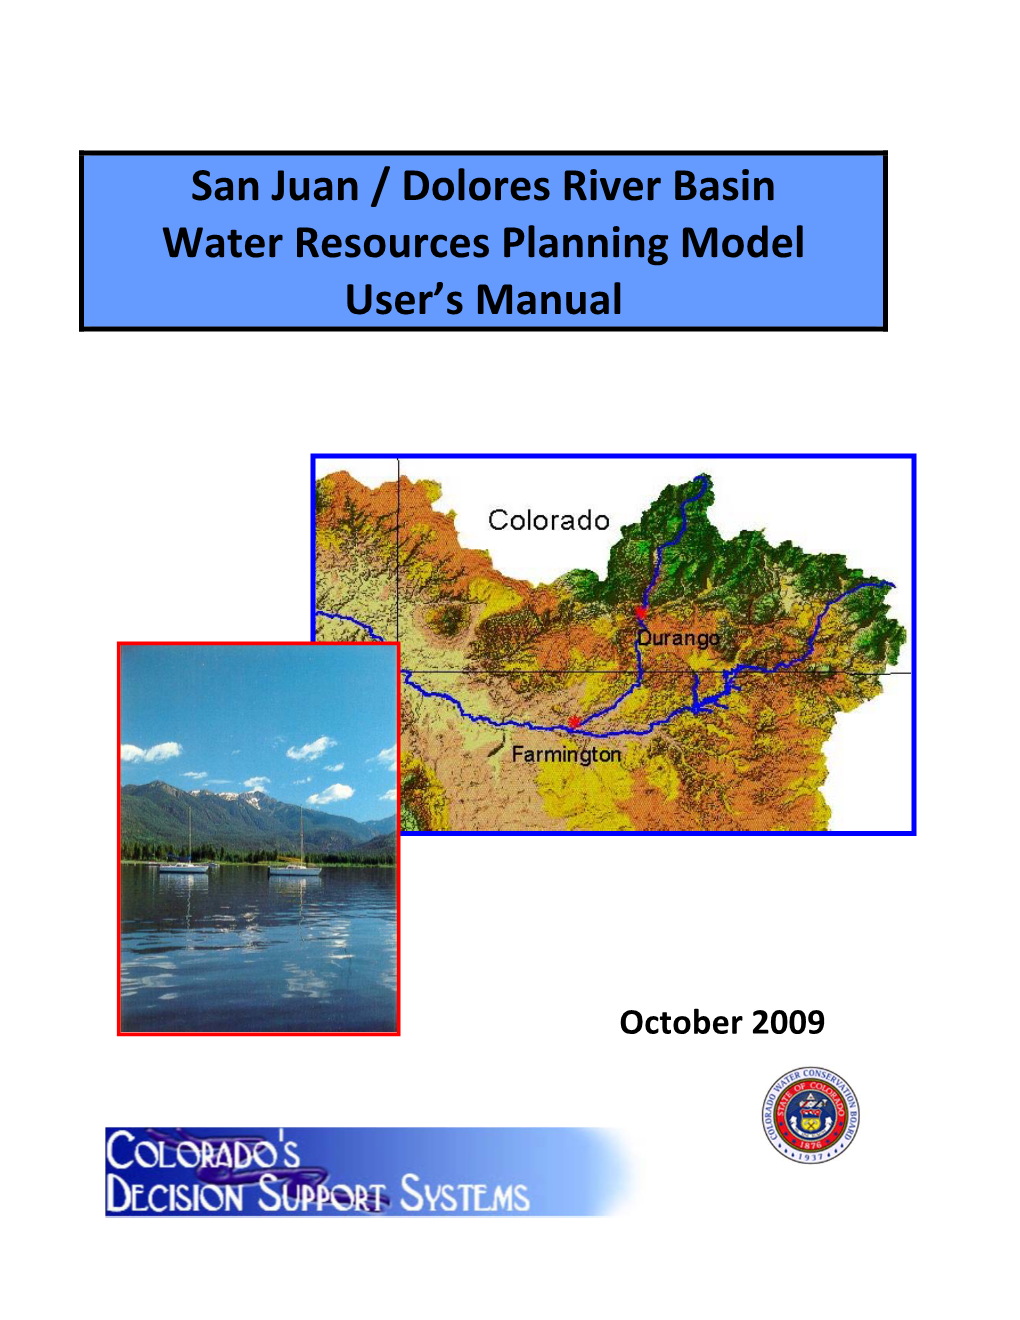 San Juan / Dolores River Basin Water Resources Planning Model